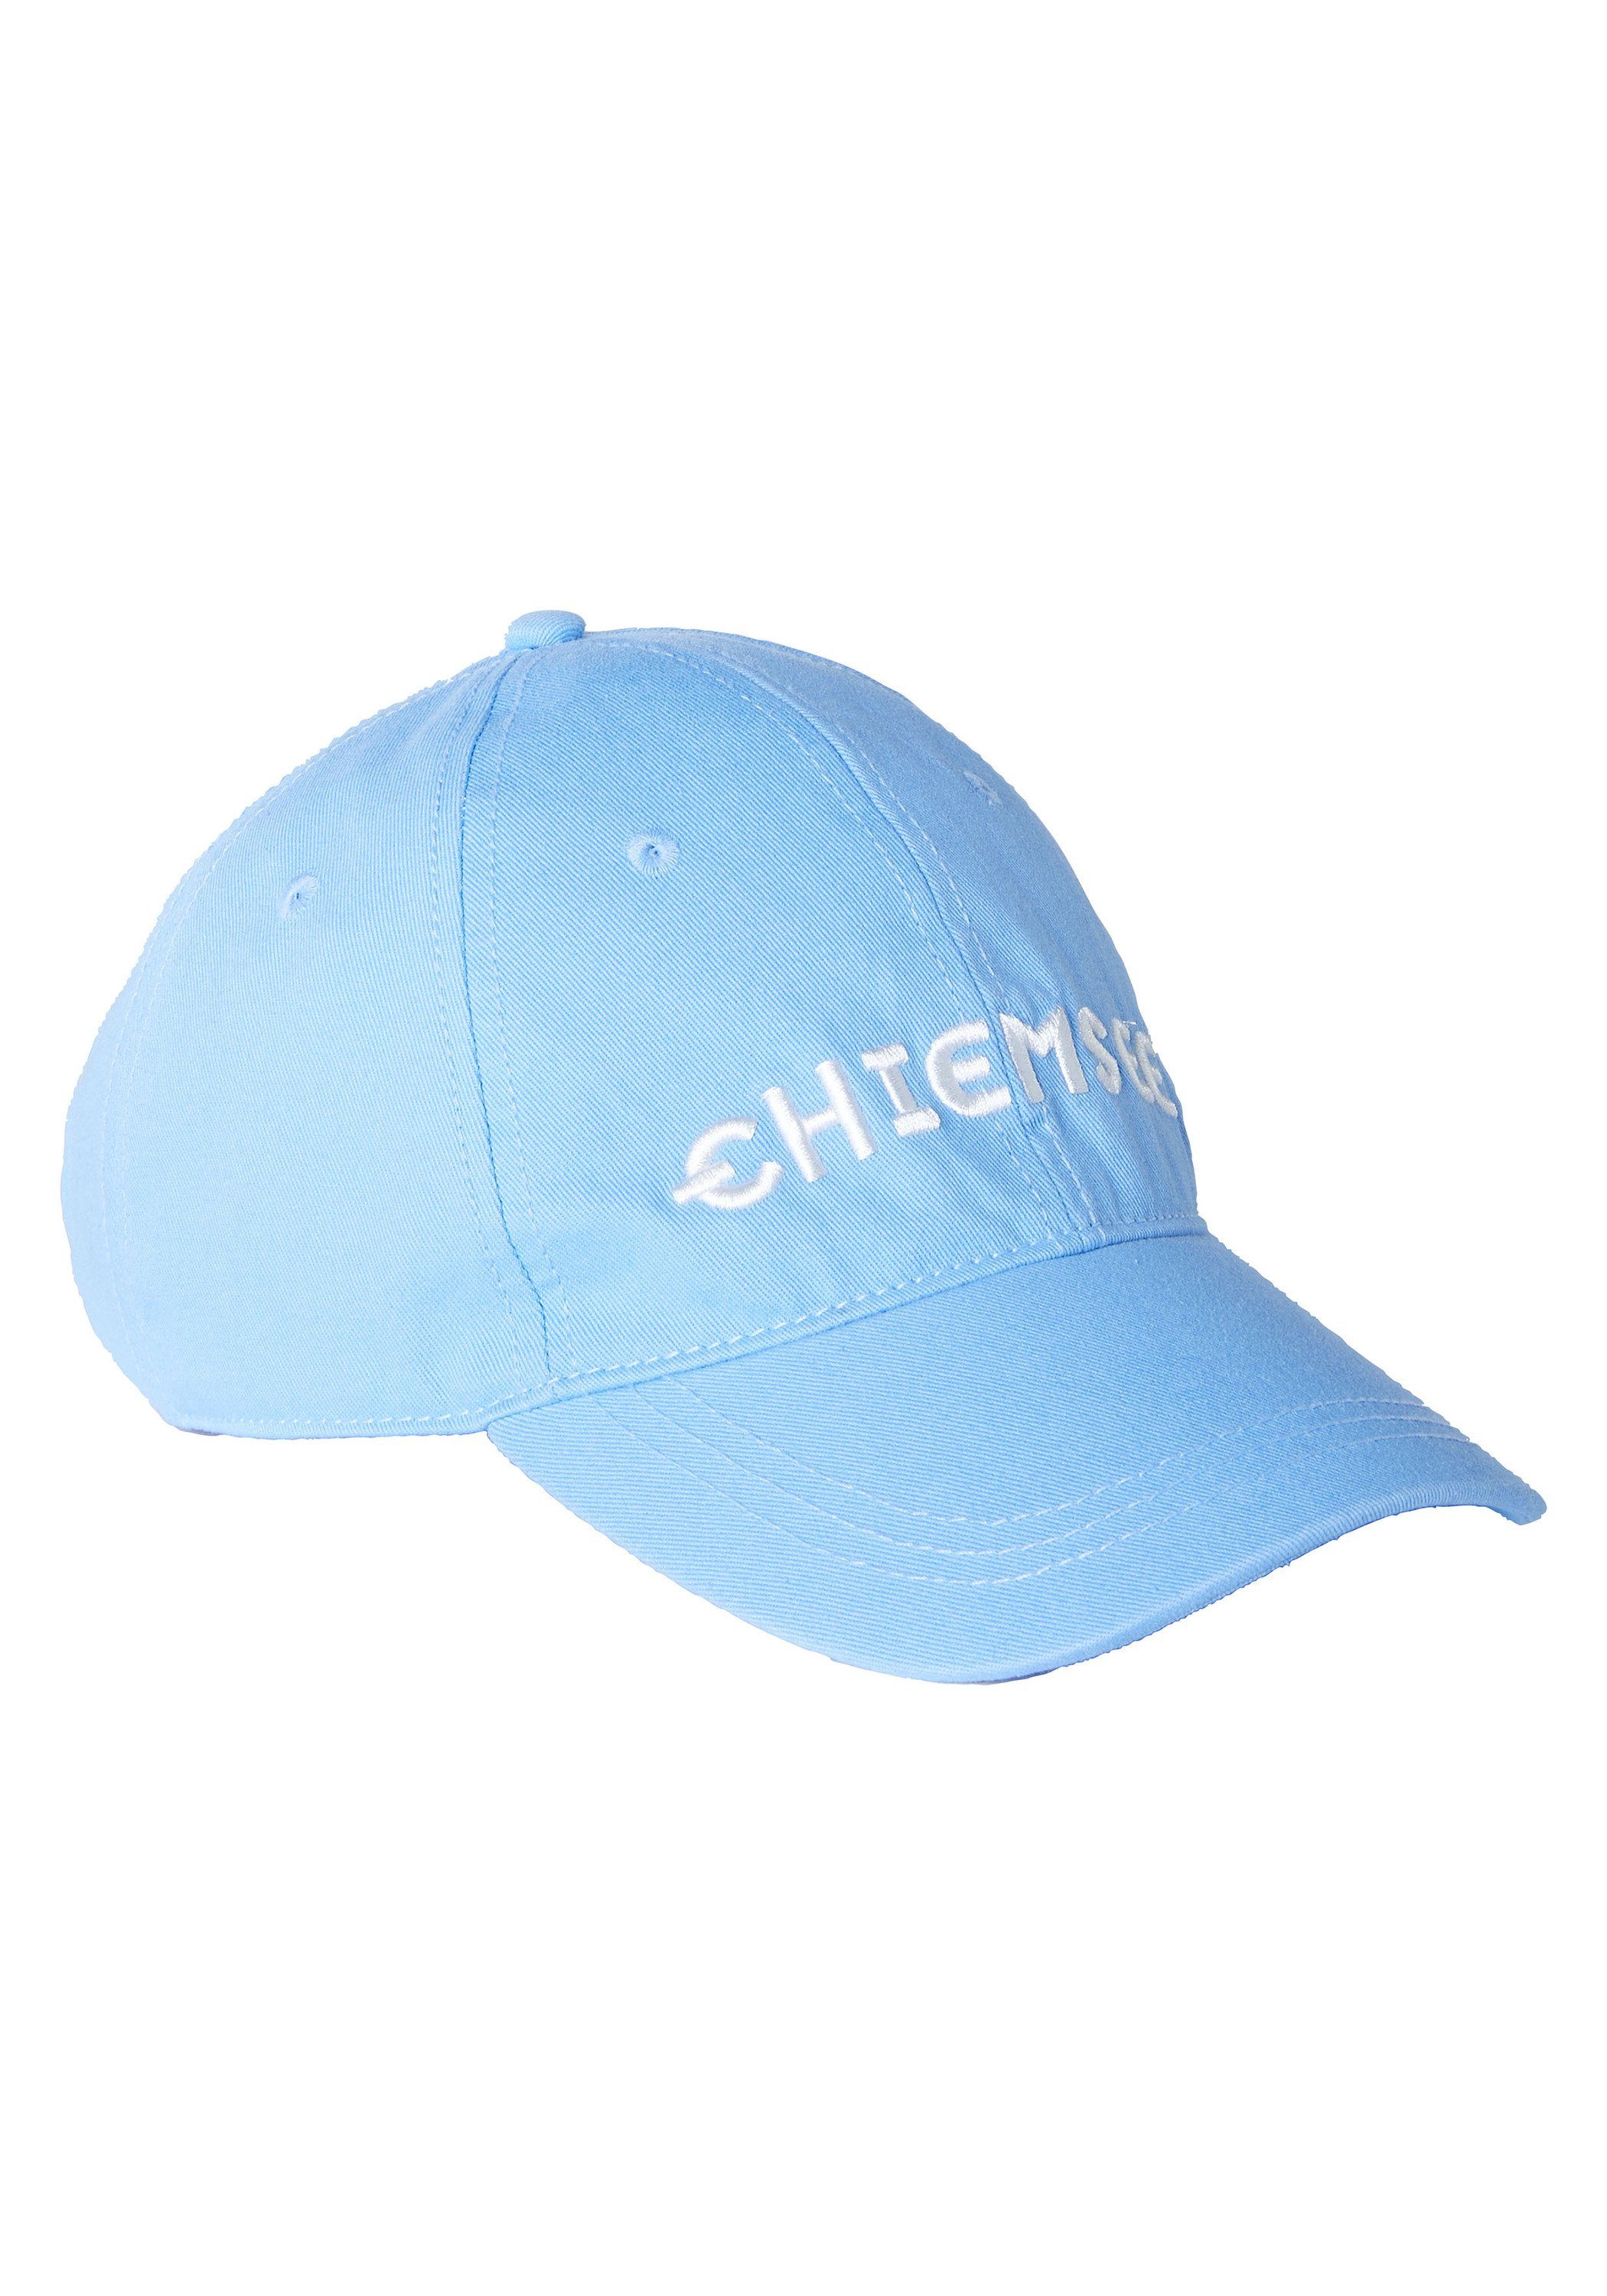 Chiemsee Baseball Cap Unisex Cap aus Baumwolle mit Logo 1 Sky Blue